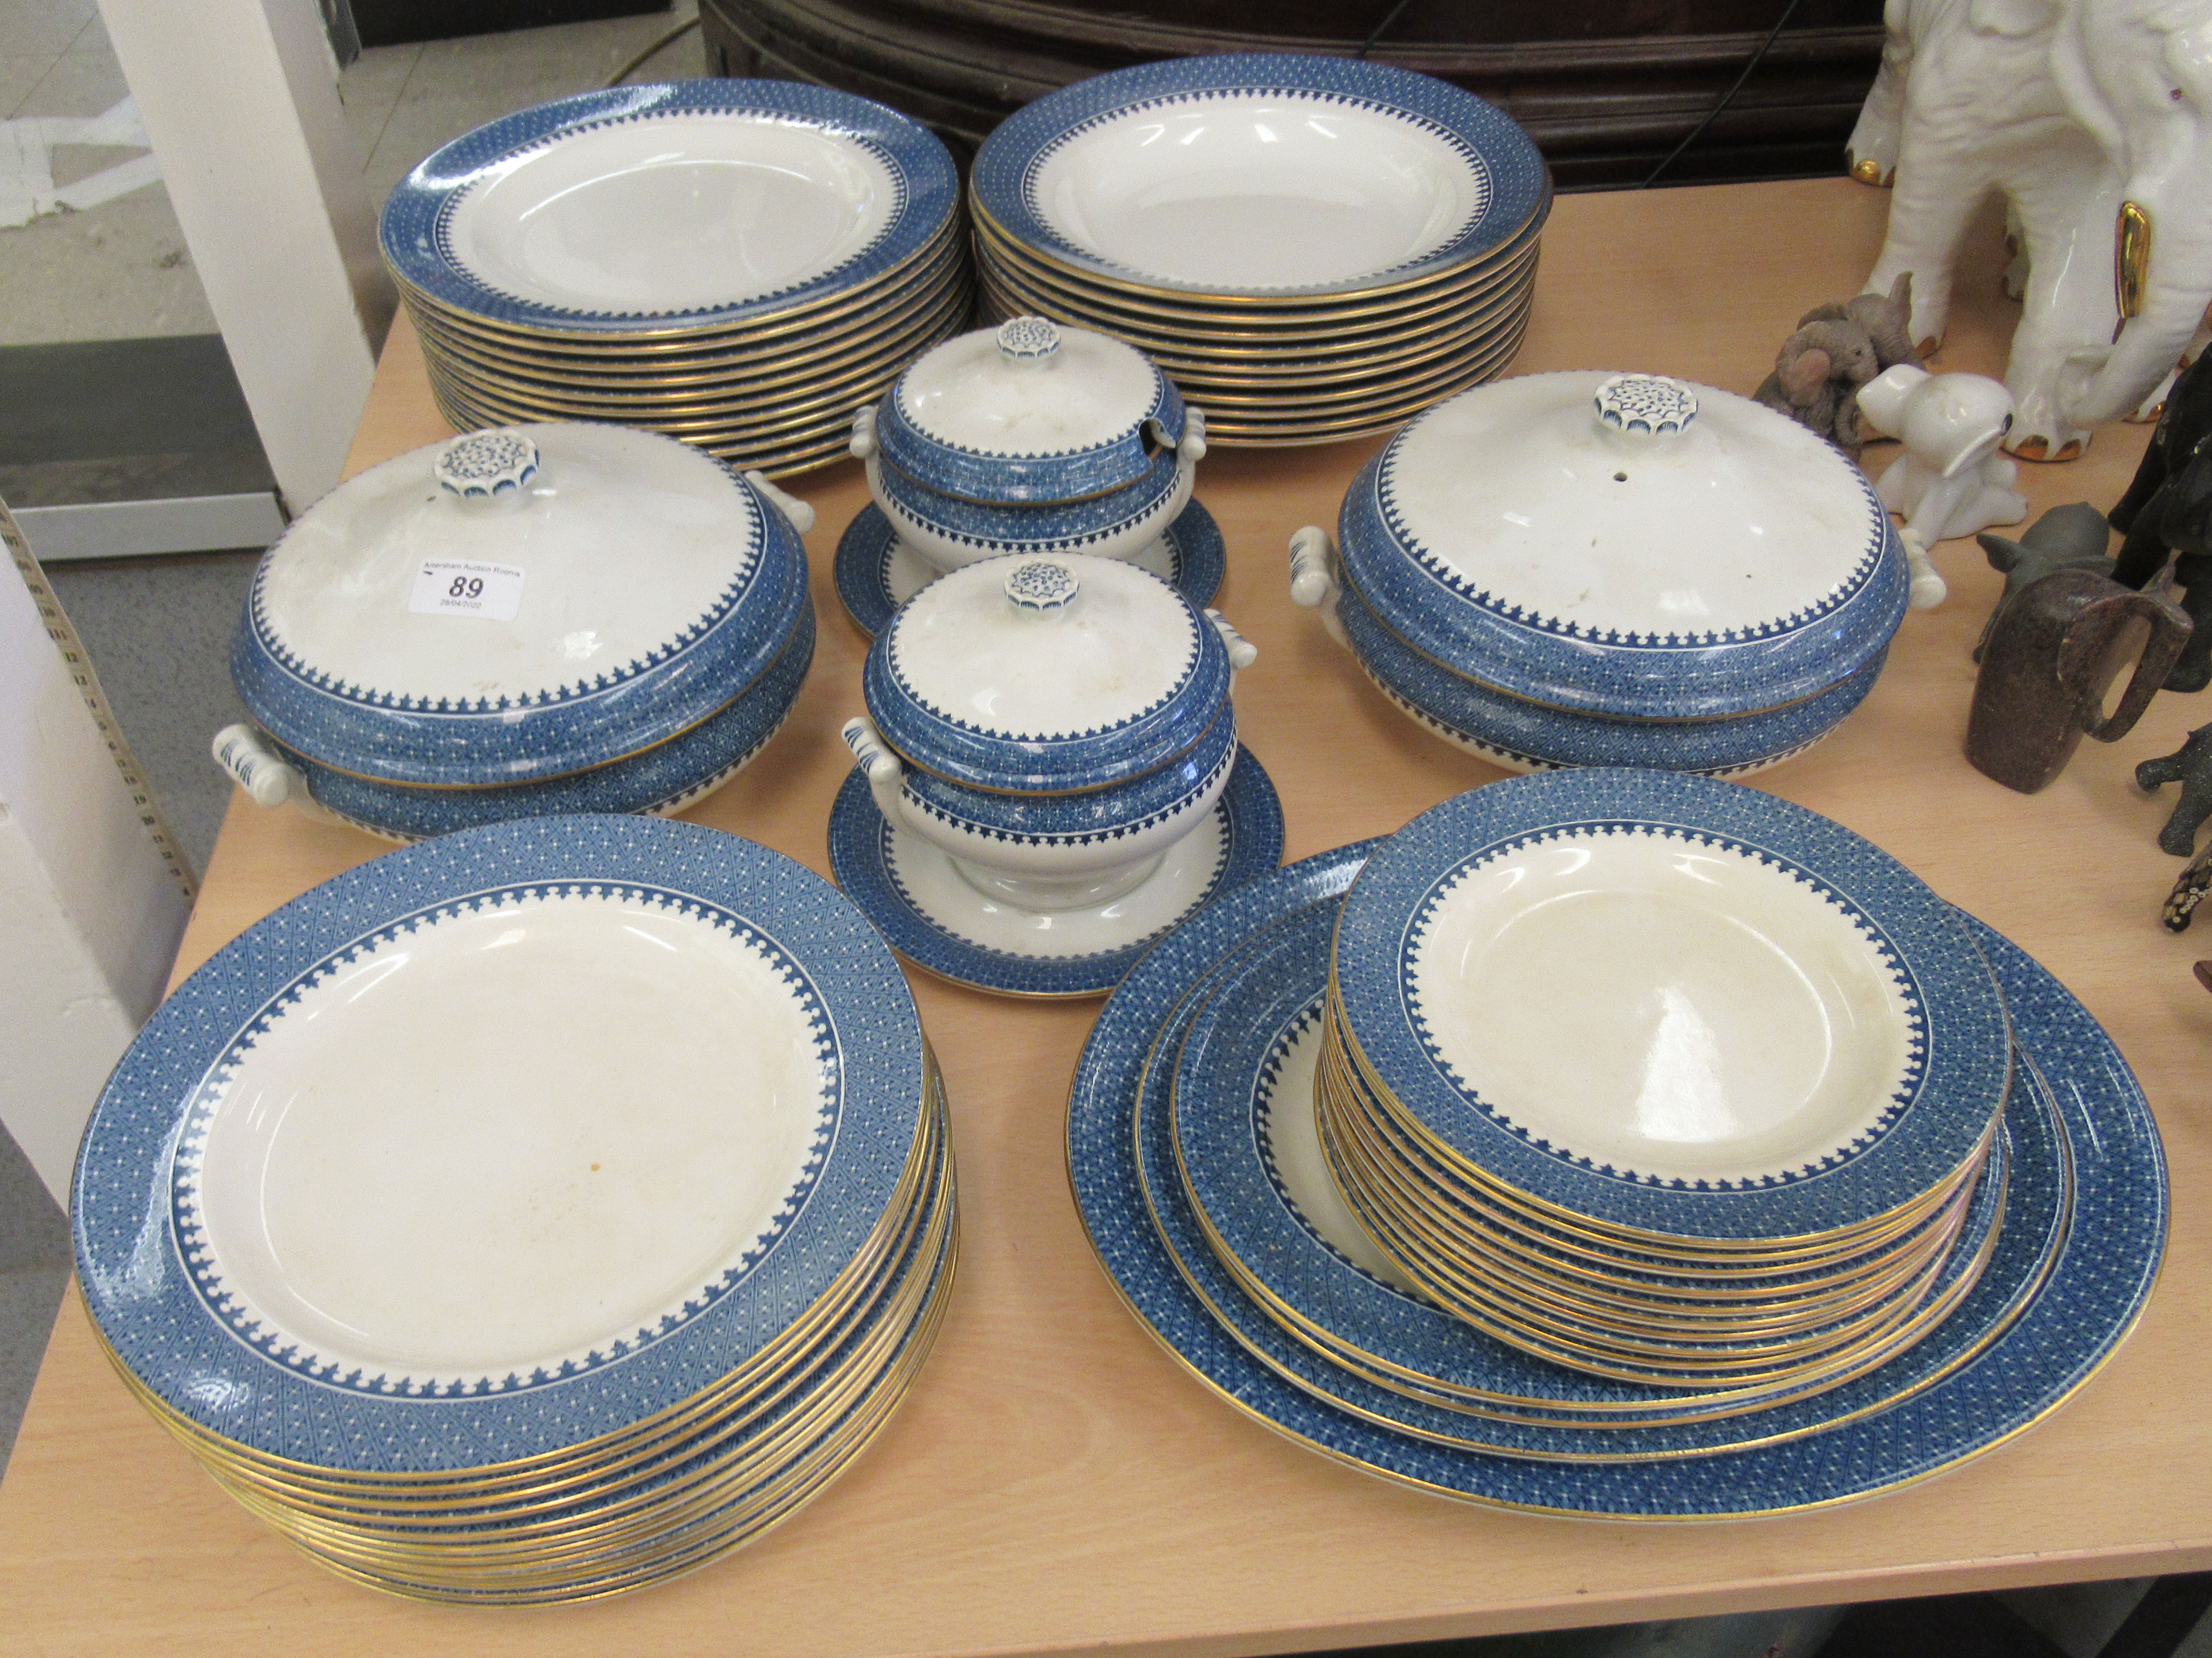 Wedgwood china Lynn pattern tableware